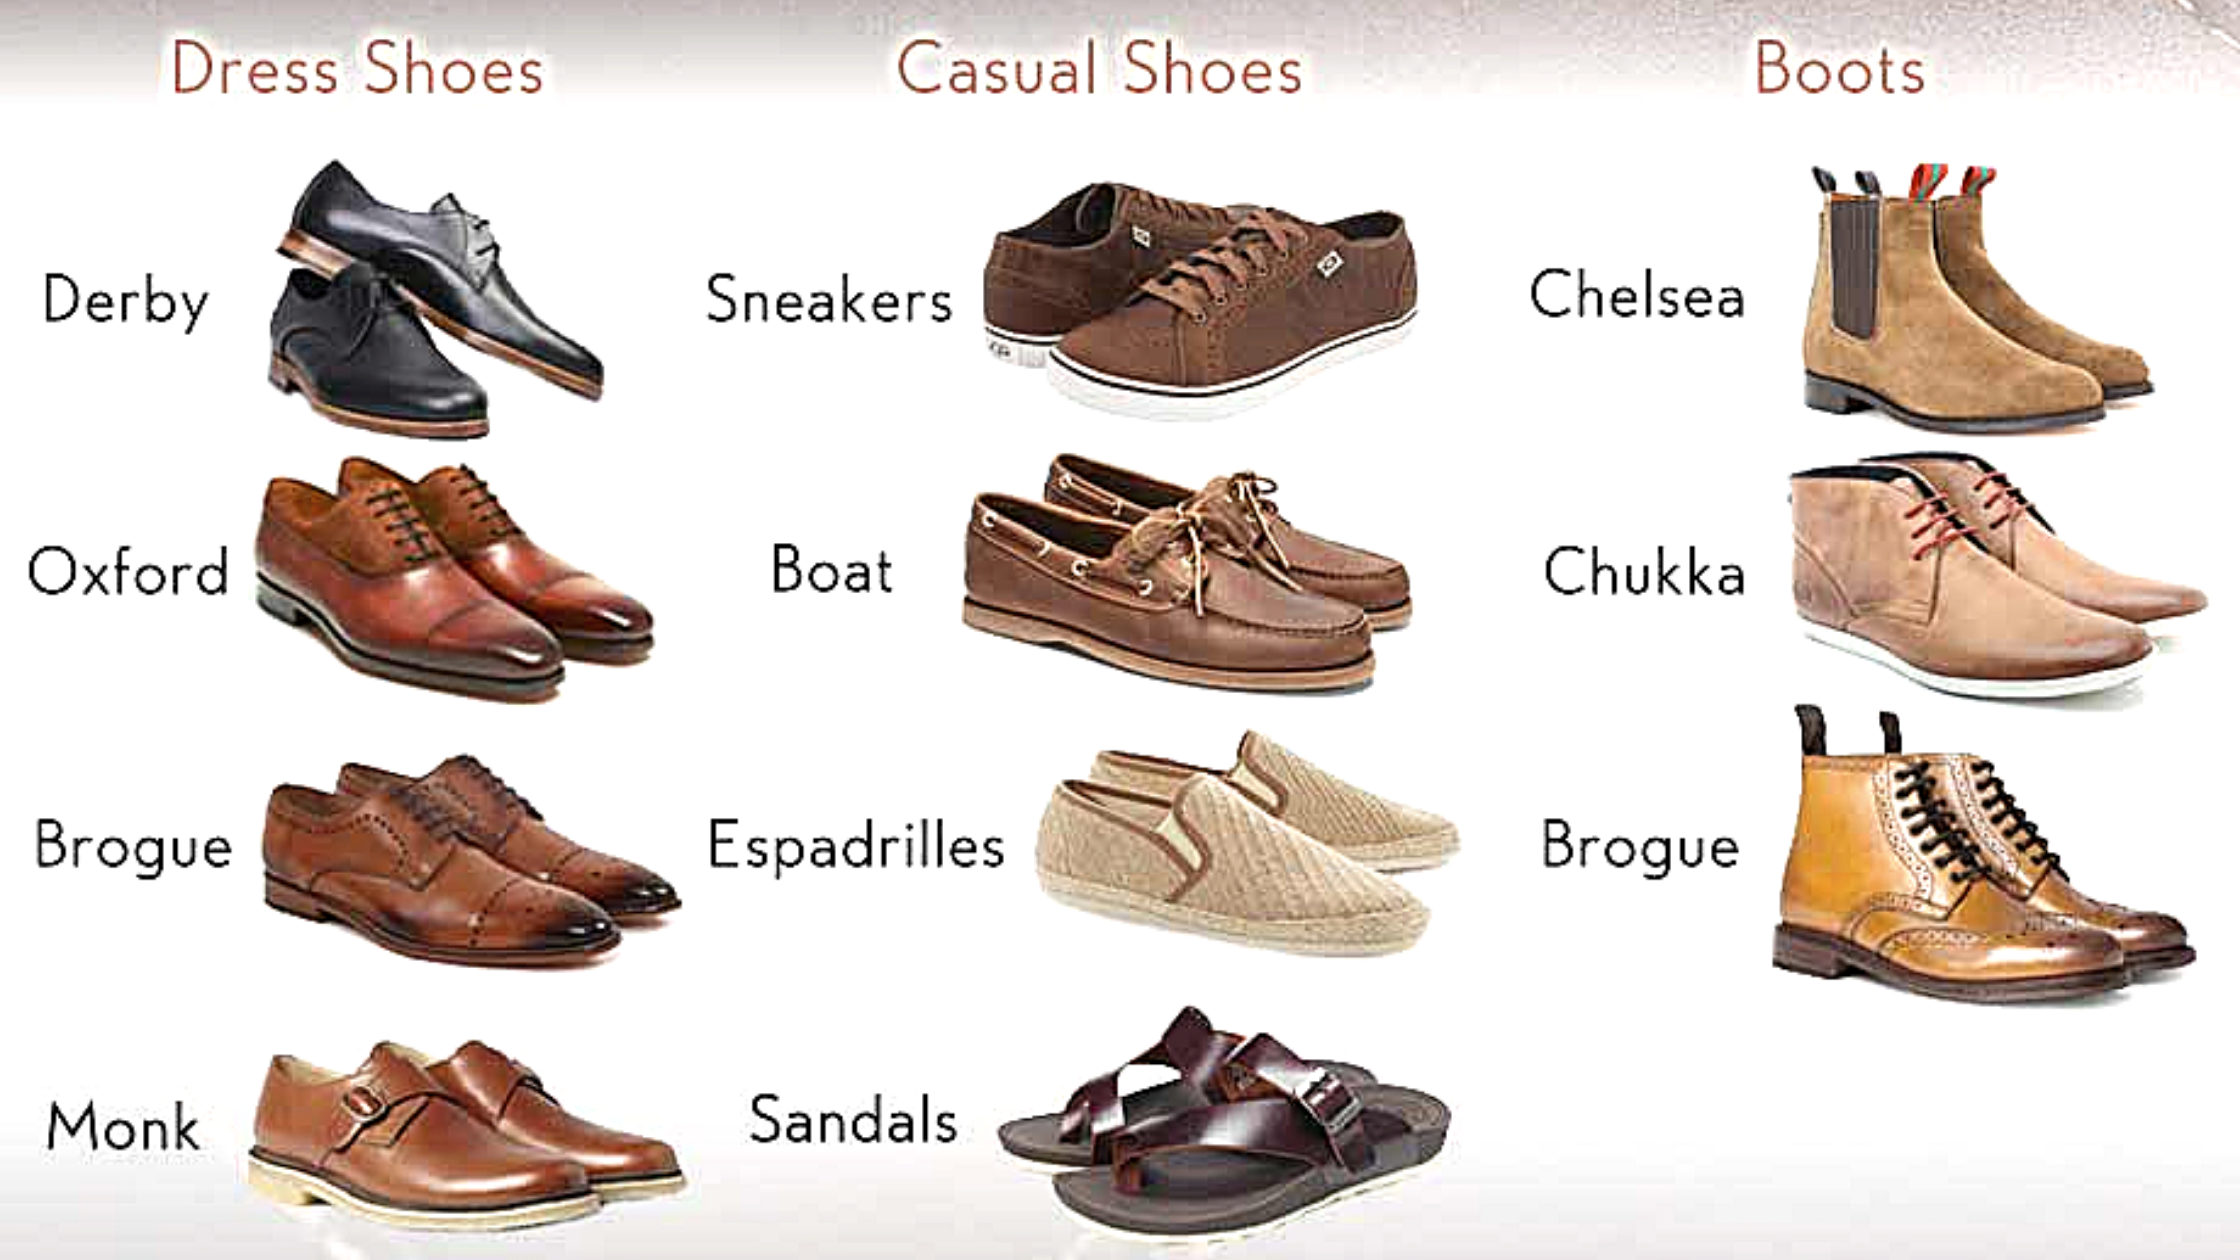 ᏔᎾᎷᎬN'Ꮪ ᏚᎻᎾᎬᏚ Poshmark Heels Sandals Pumps Flats | Fashion vocabulary,  Fashion terms, Fashion infographic